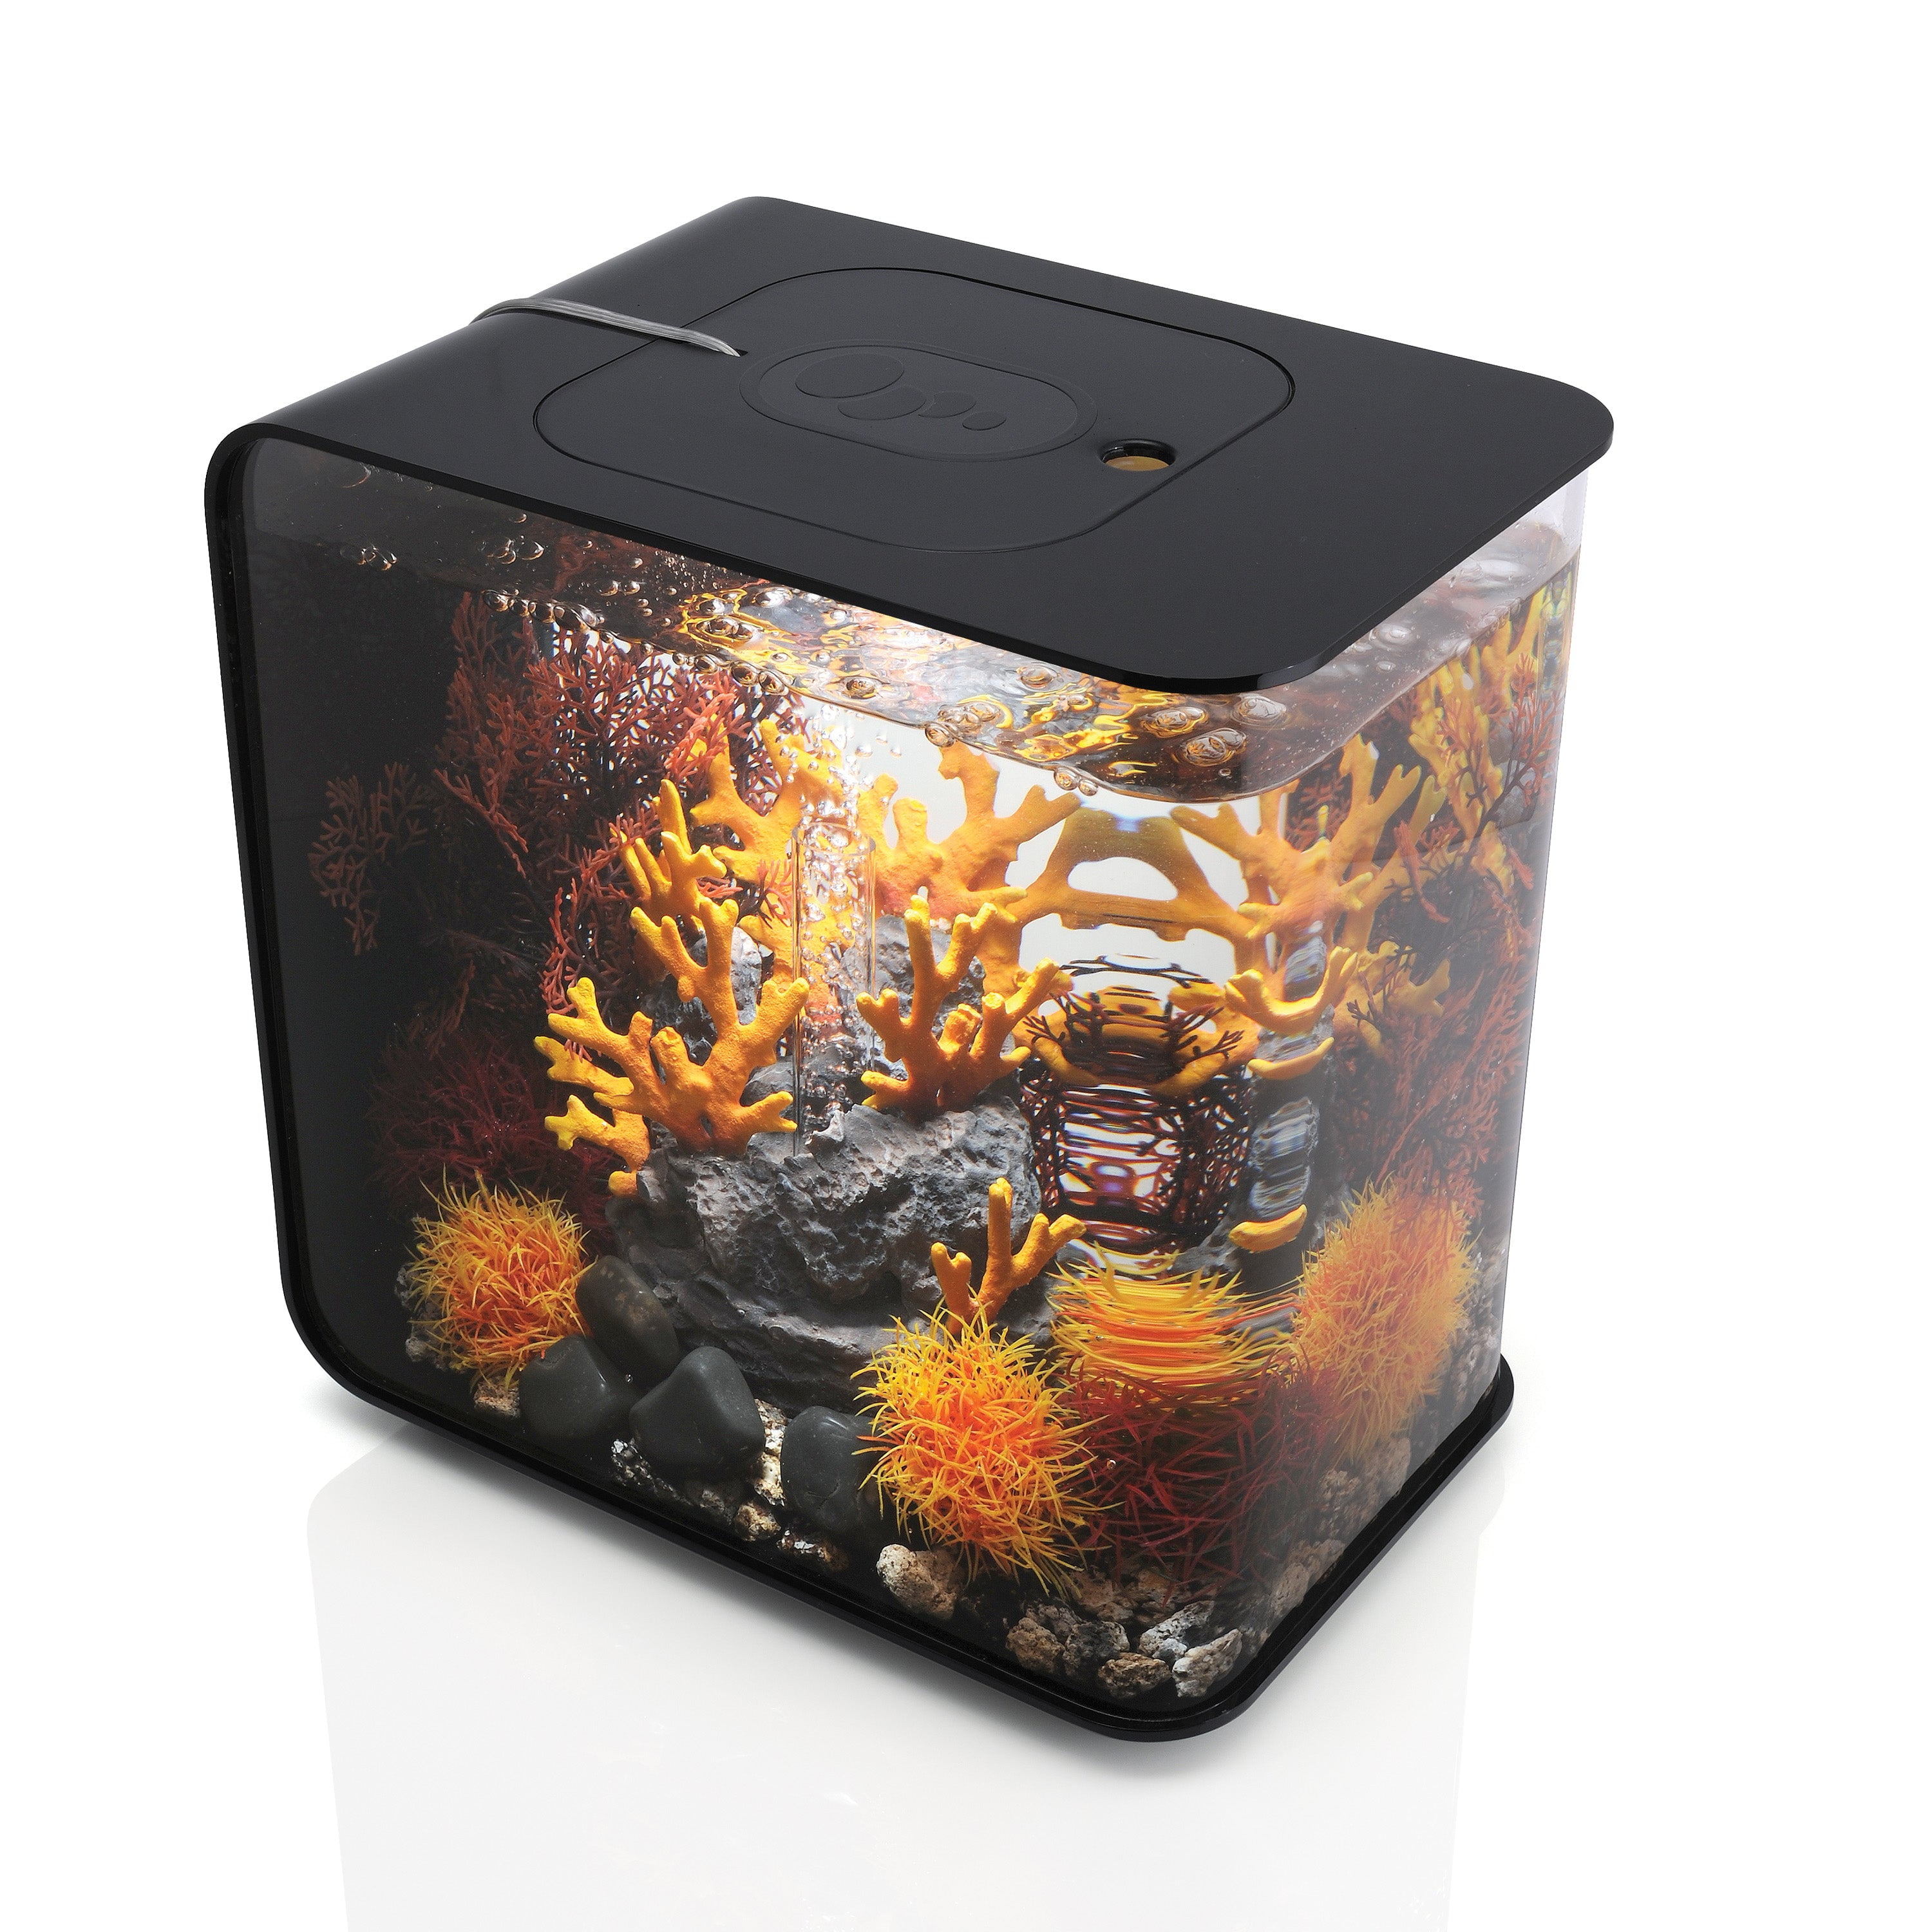 Flow 15 Aquarium with Standard Light, 4 Gallon, Black